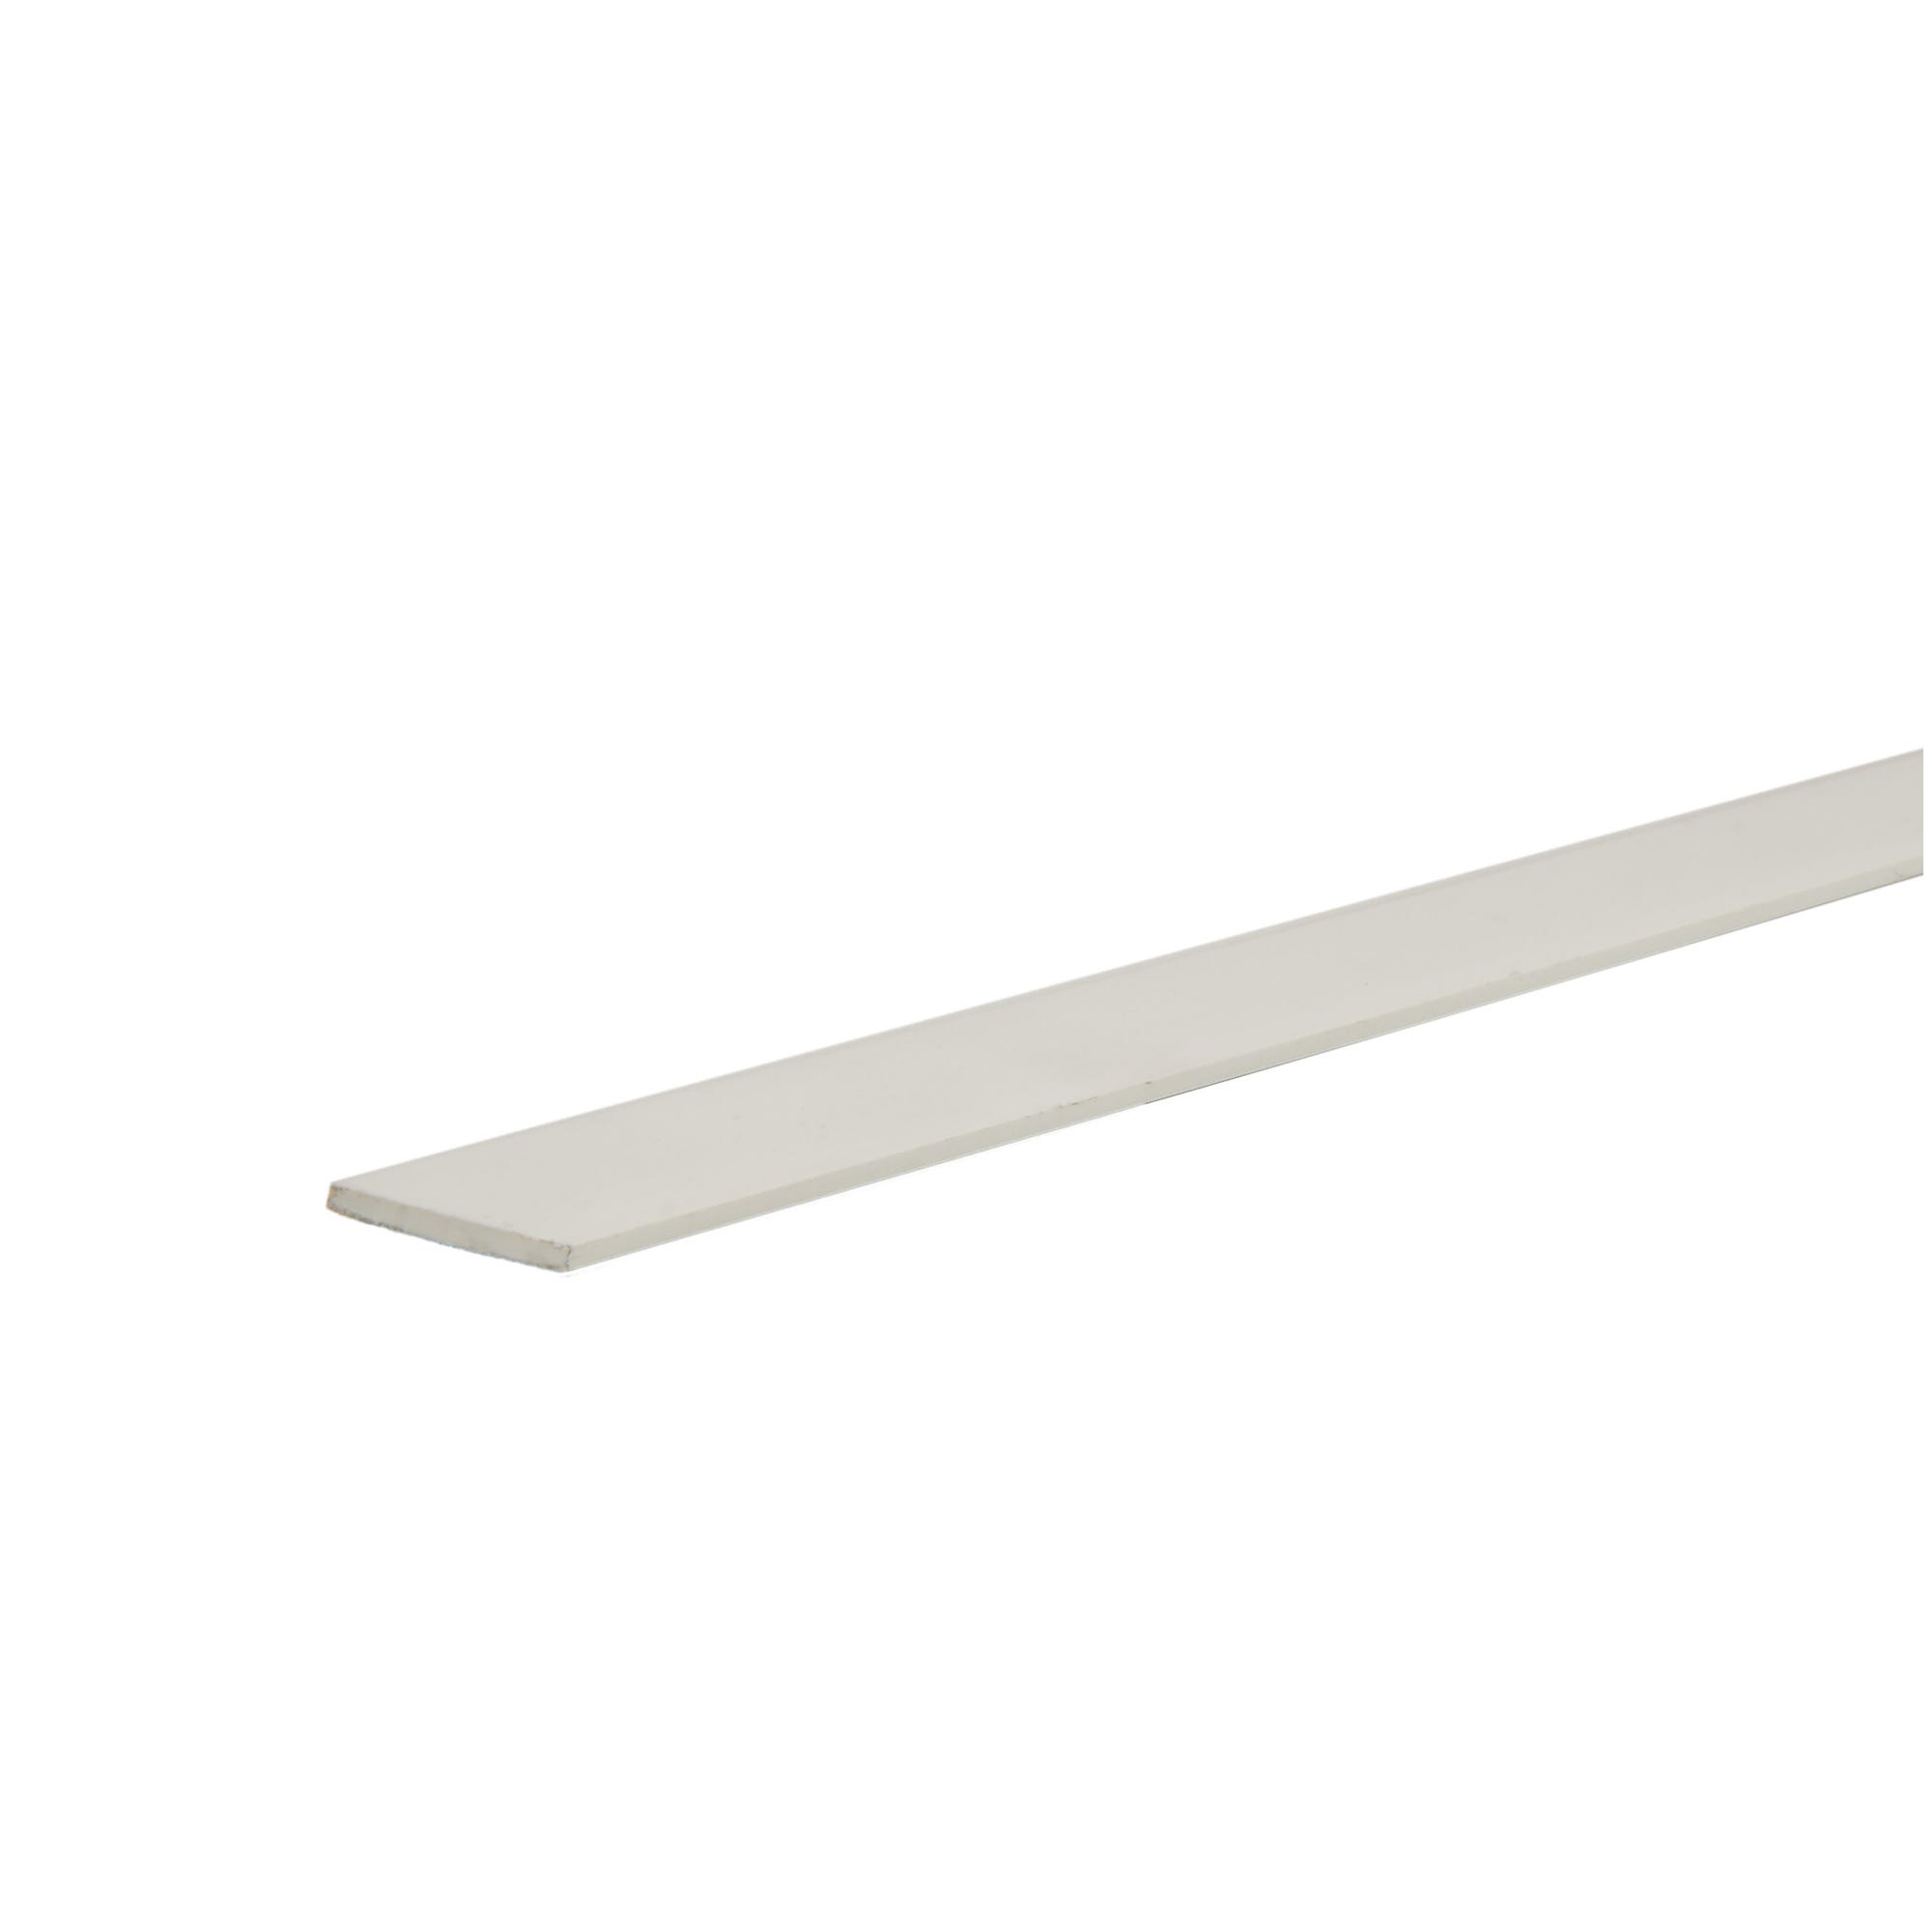 Champlat 2 angles vifs en PVC blanc 2 x 30 mm Long.2,6 m - SOTRINBOIS 0